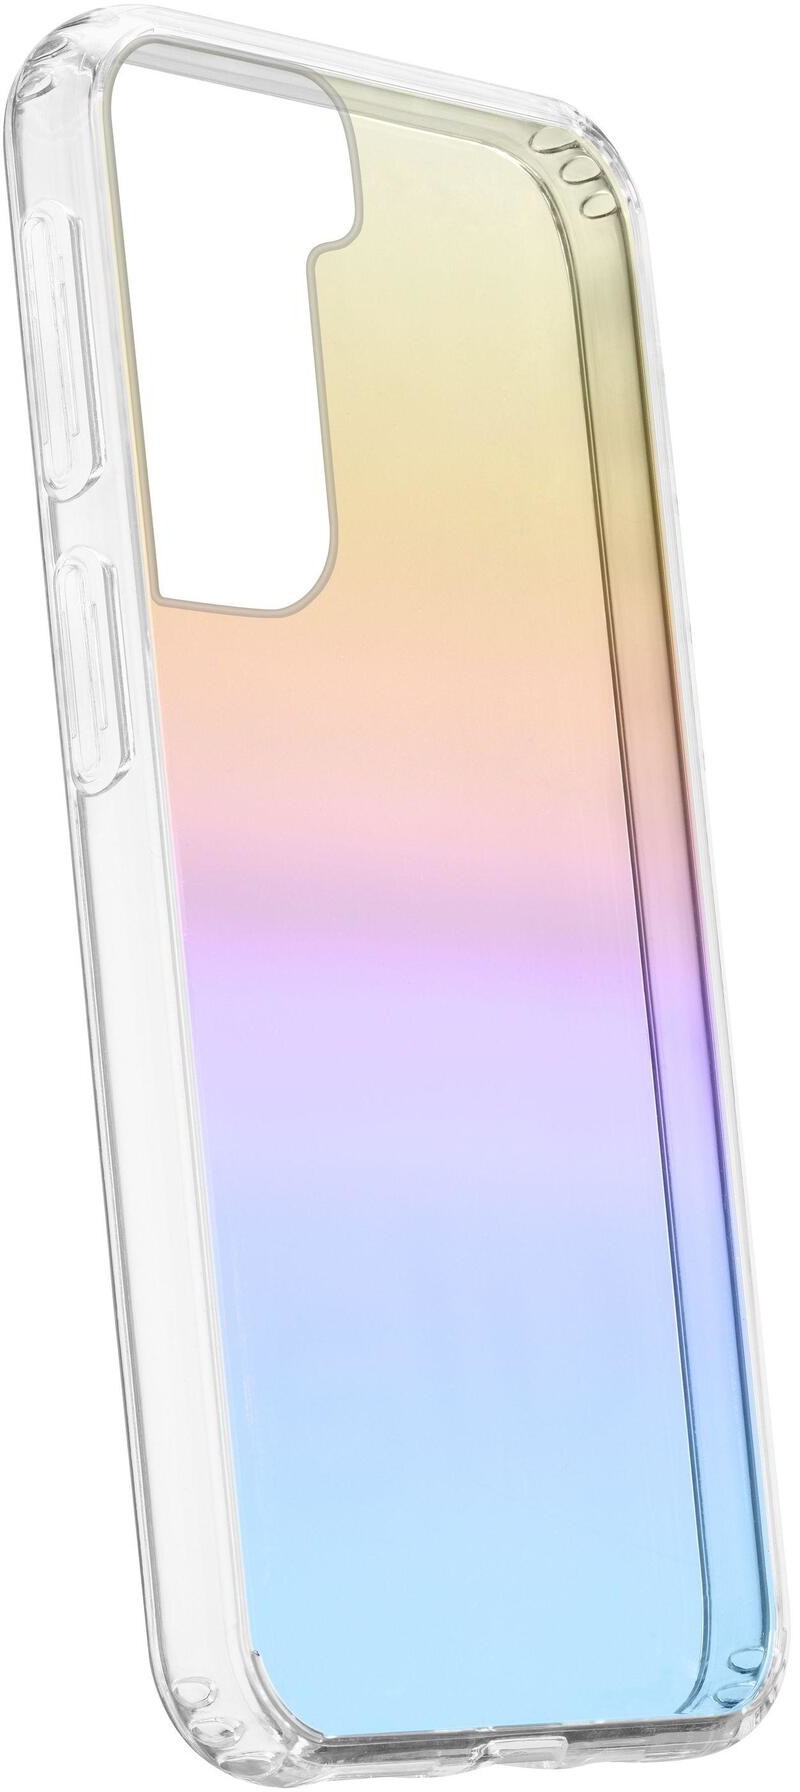 Калъф Cellularline - Prisma, за Samsung Galaxy S21 Fe, многоцветен |  